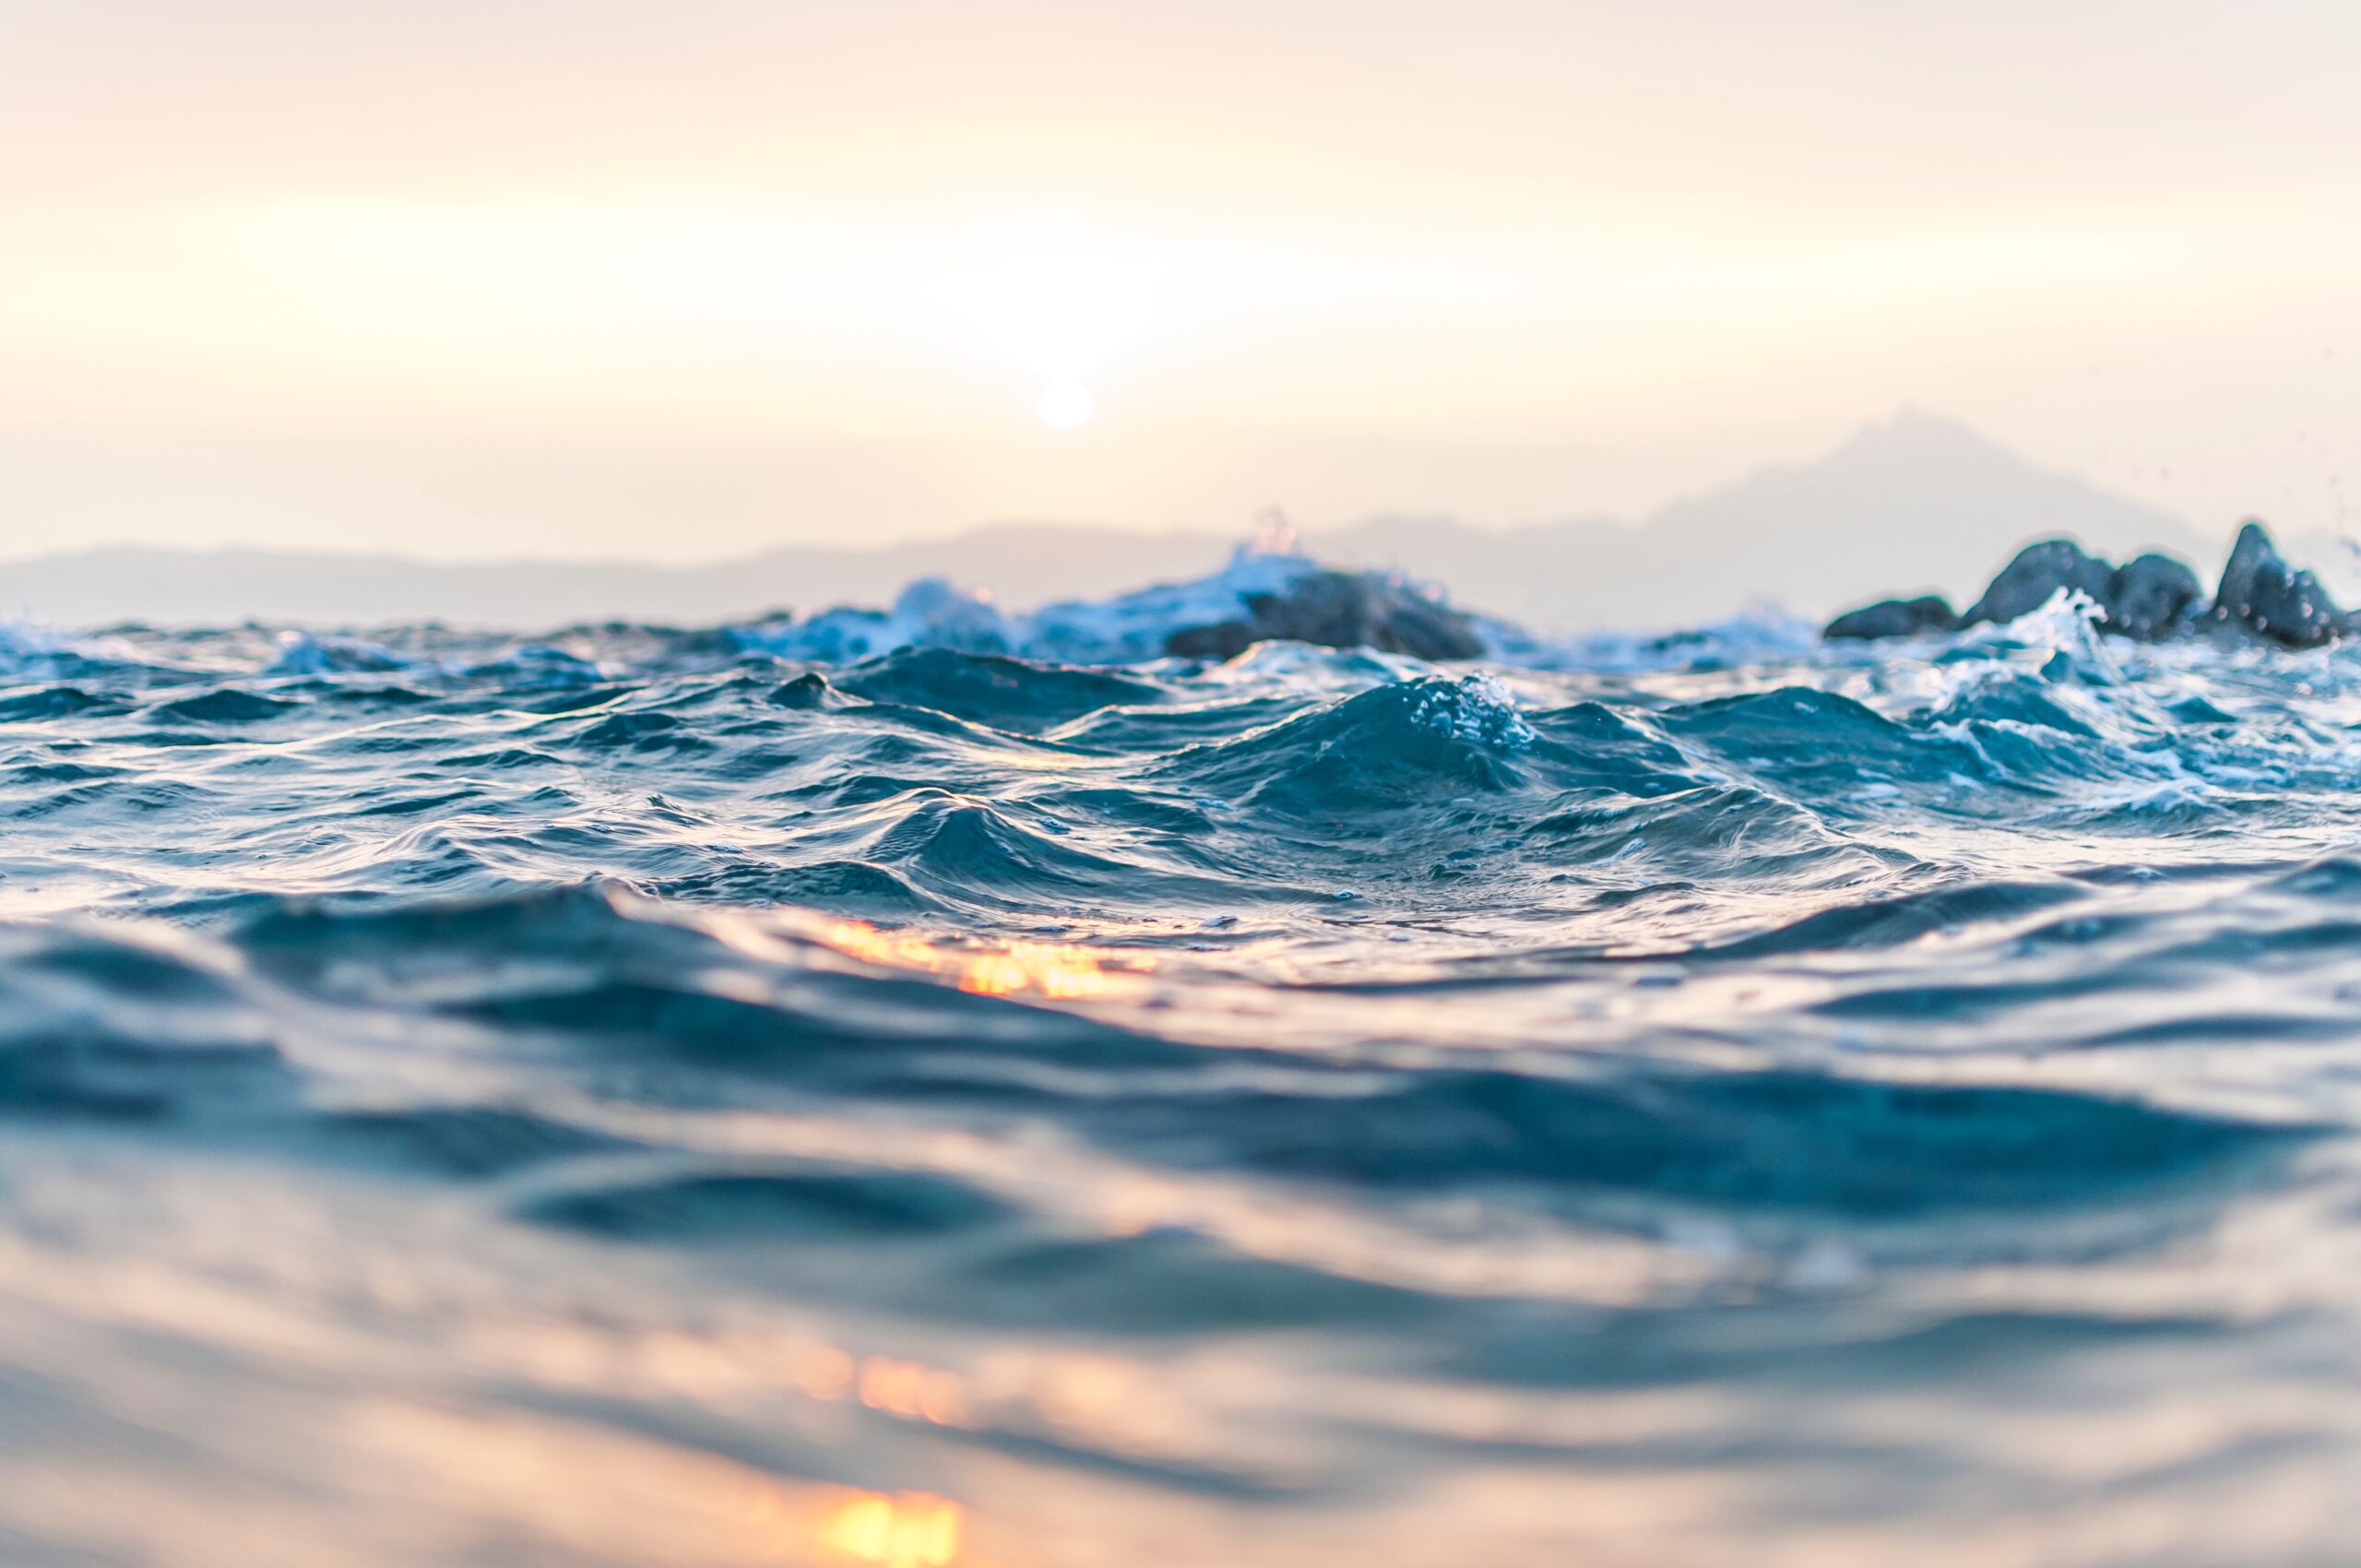 Ocean. Relating emotional variability to emotional wellbeing. Mindletic Blog